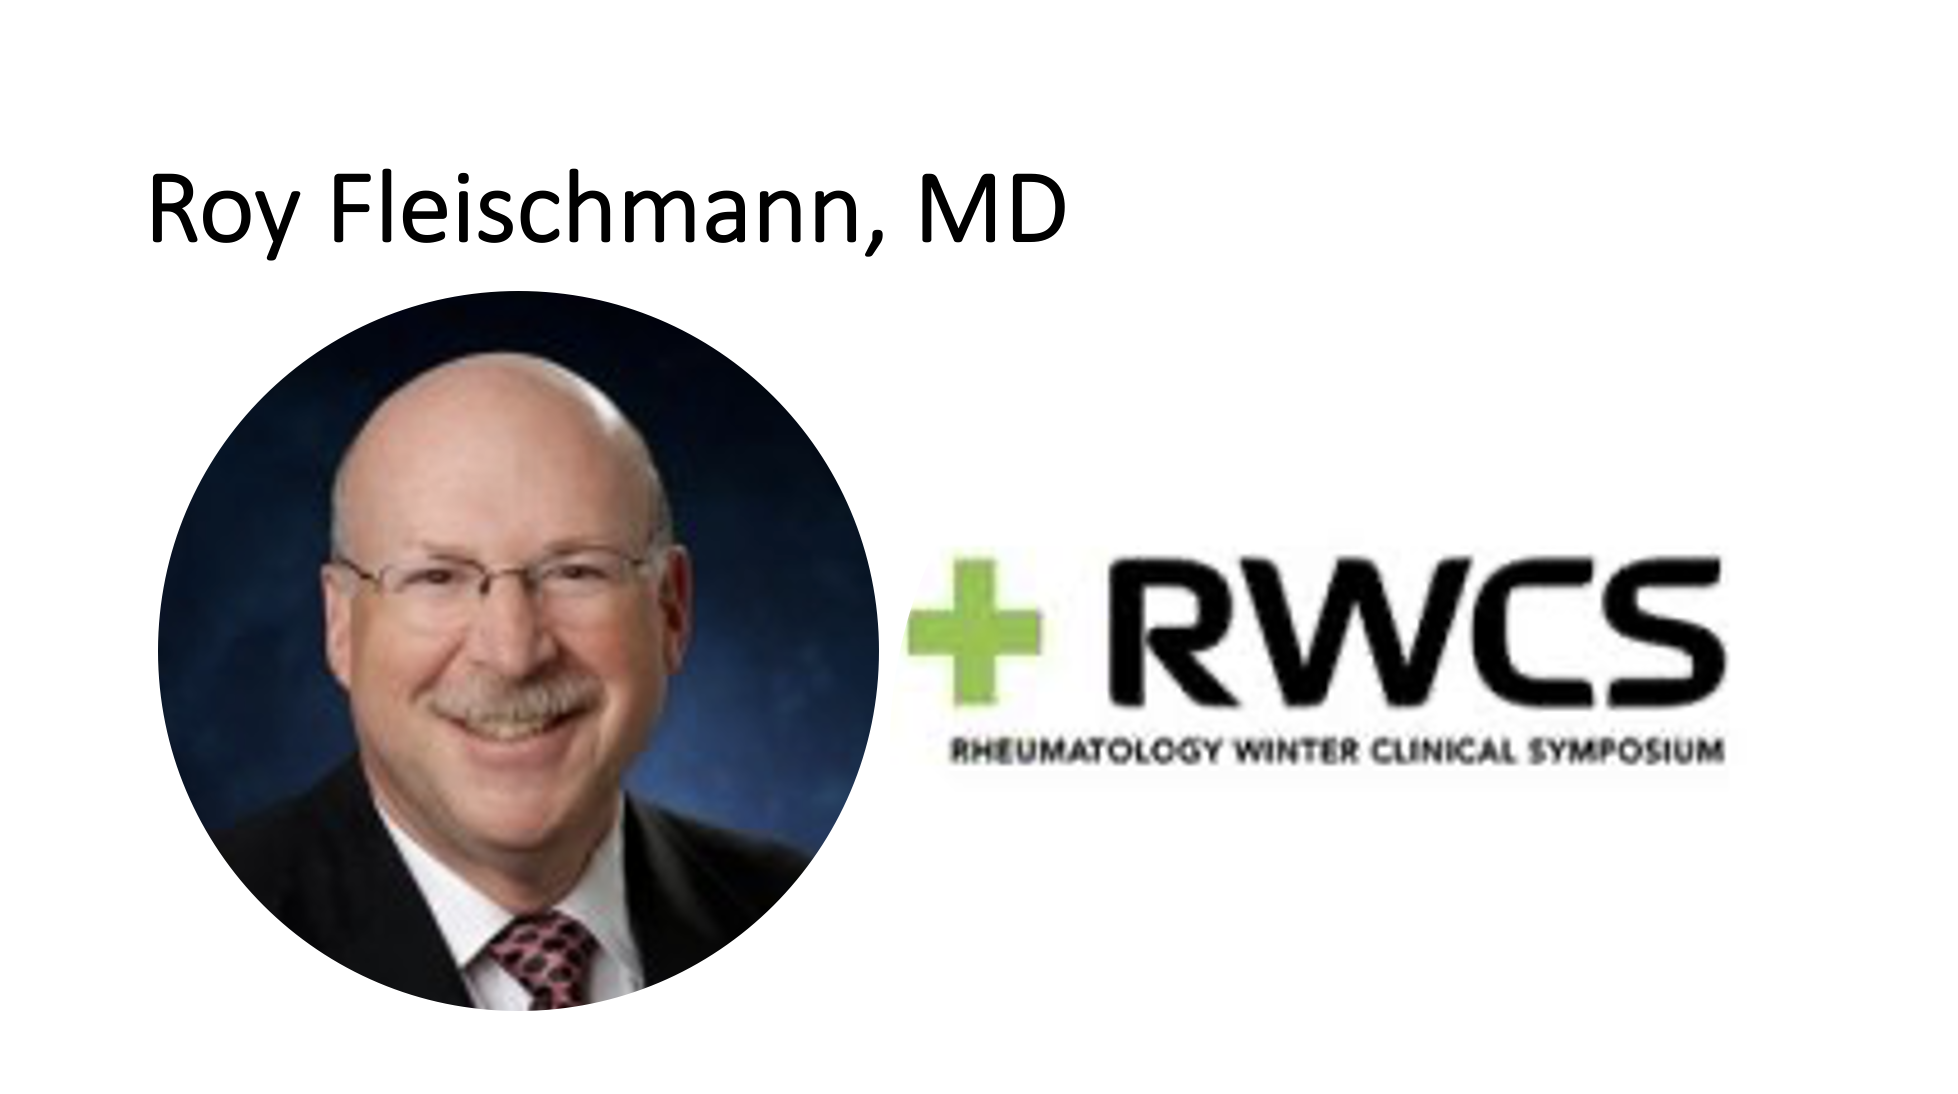 Roy Fleischmann, MD: Rheumatology Winter Clinical Symposium 